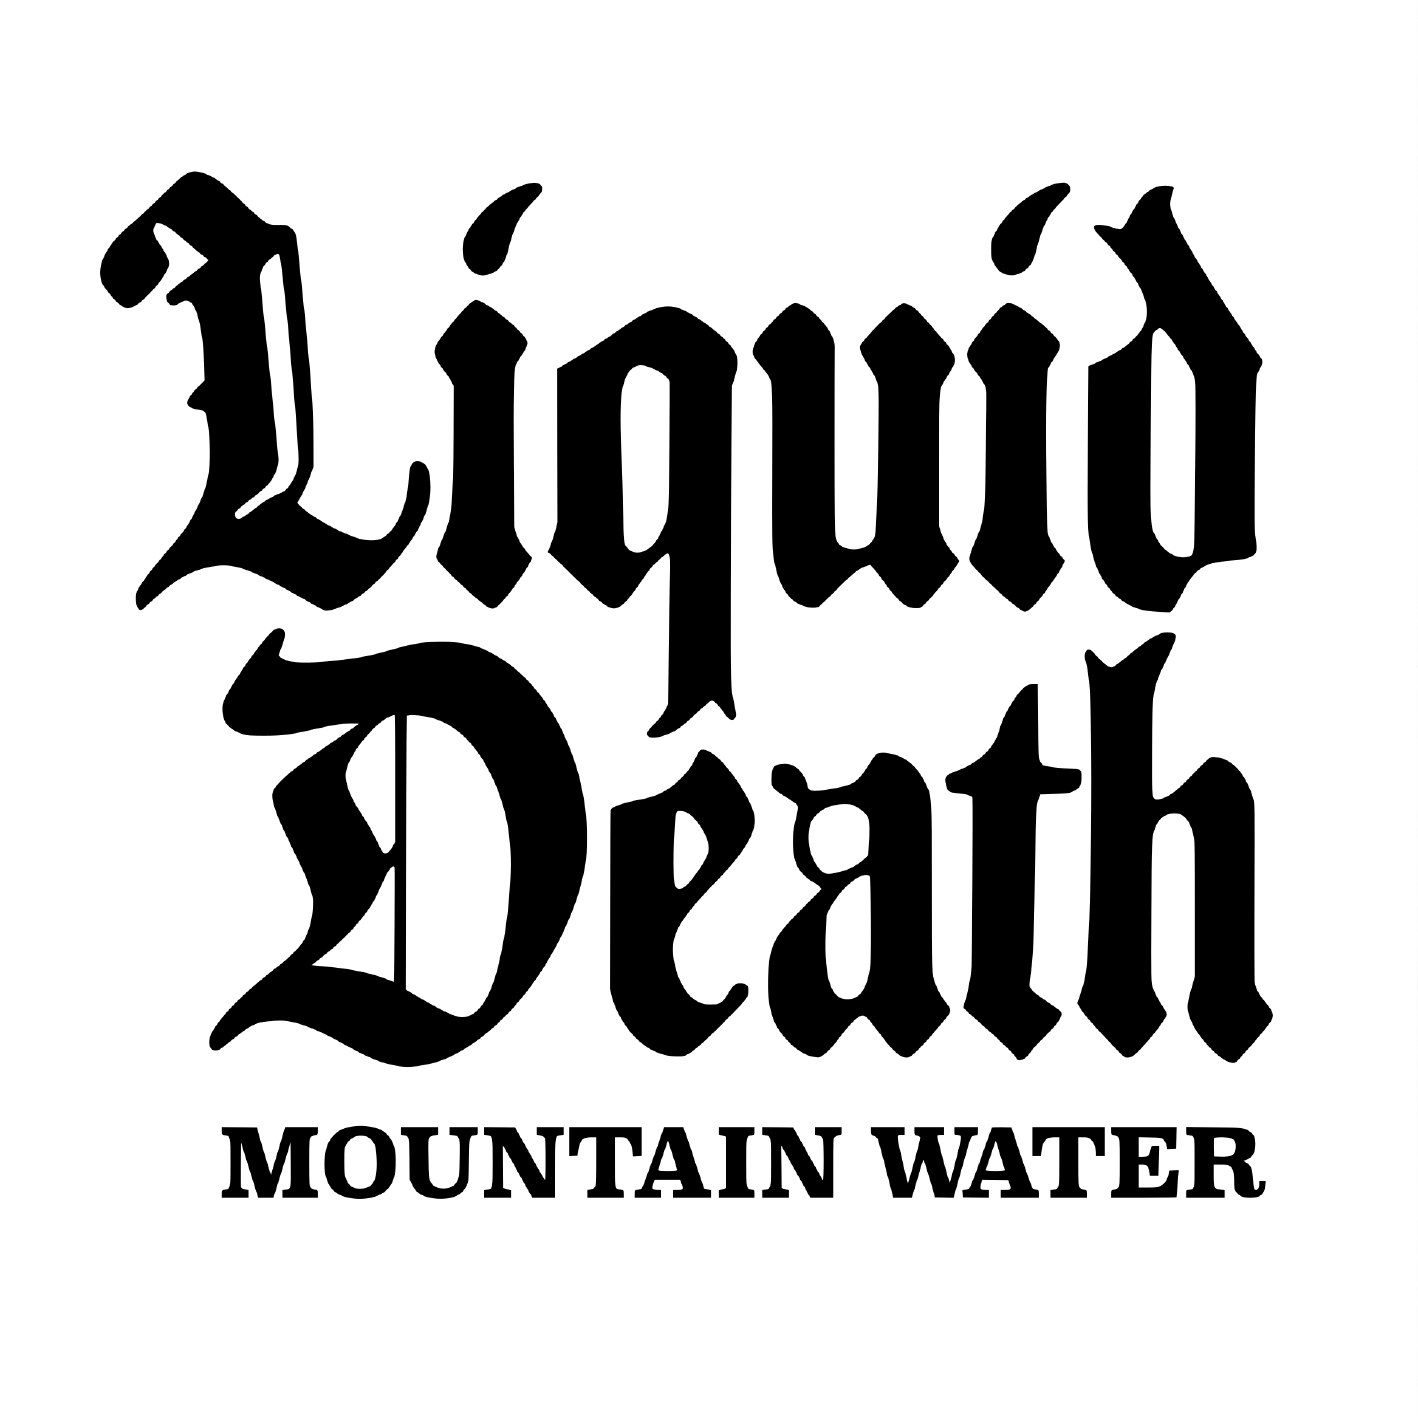 Liquid Death Logo